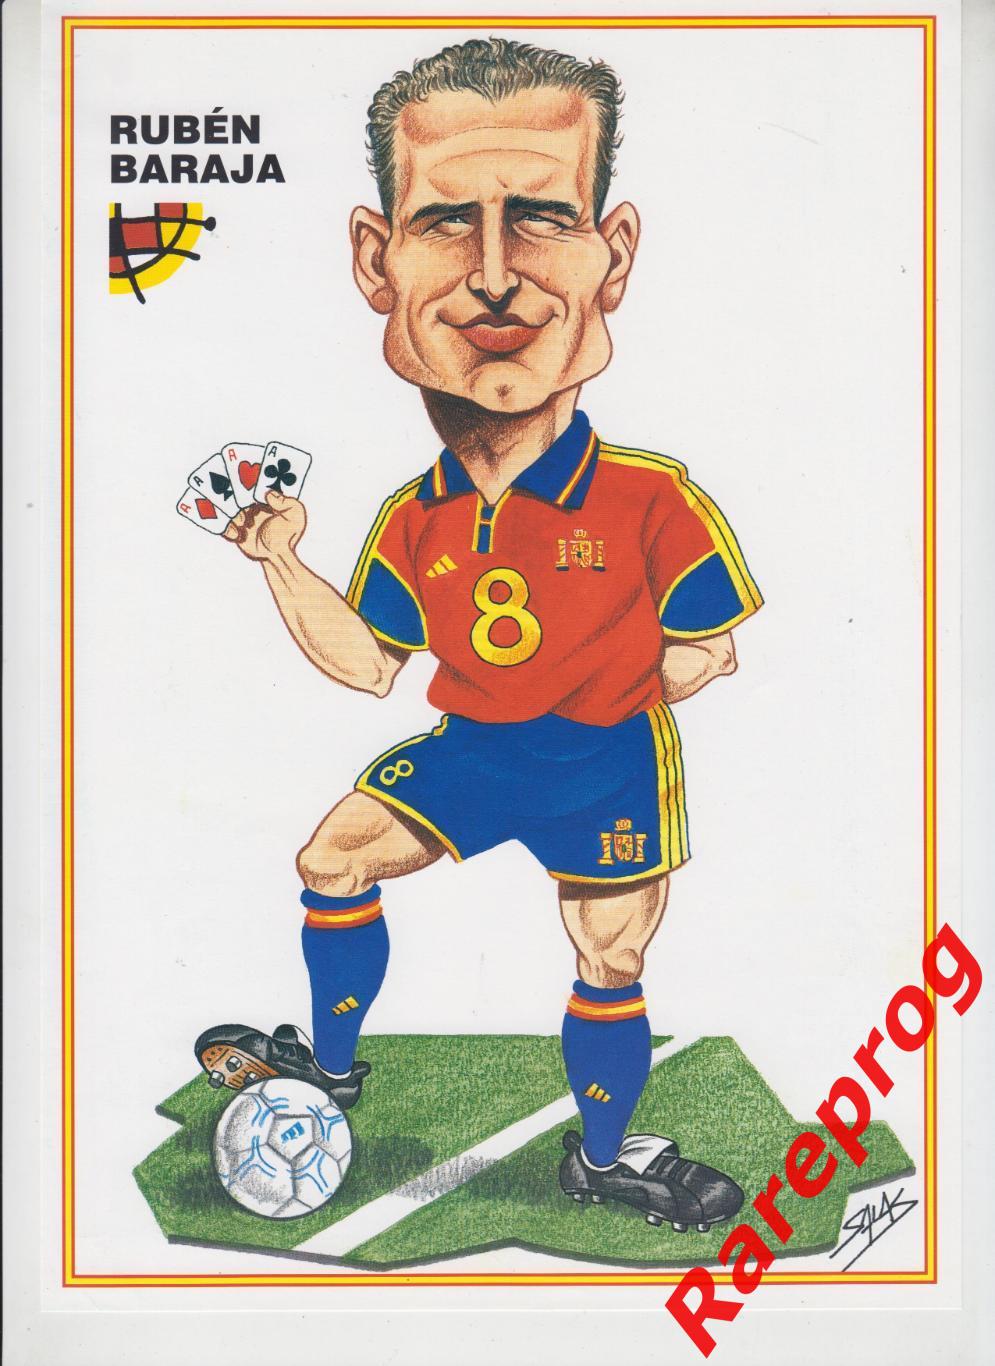 журнал Футбол RFEF Испания № 36 - июнь 2001 - постер 1